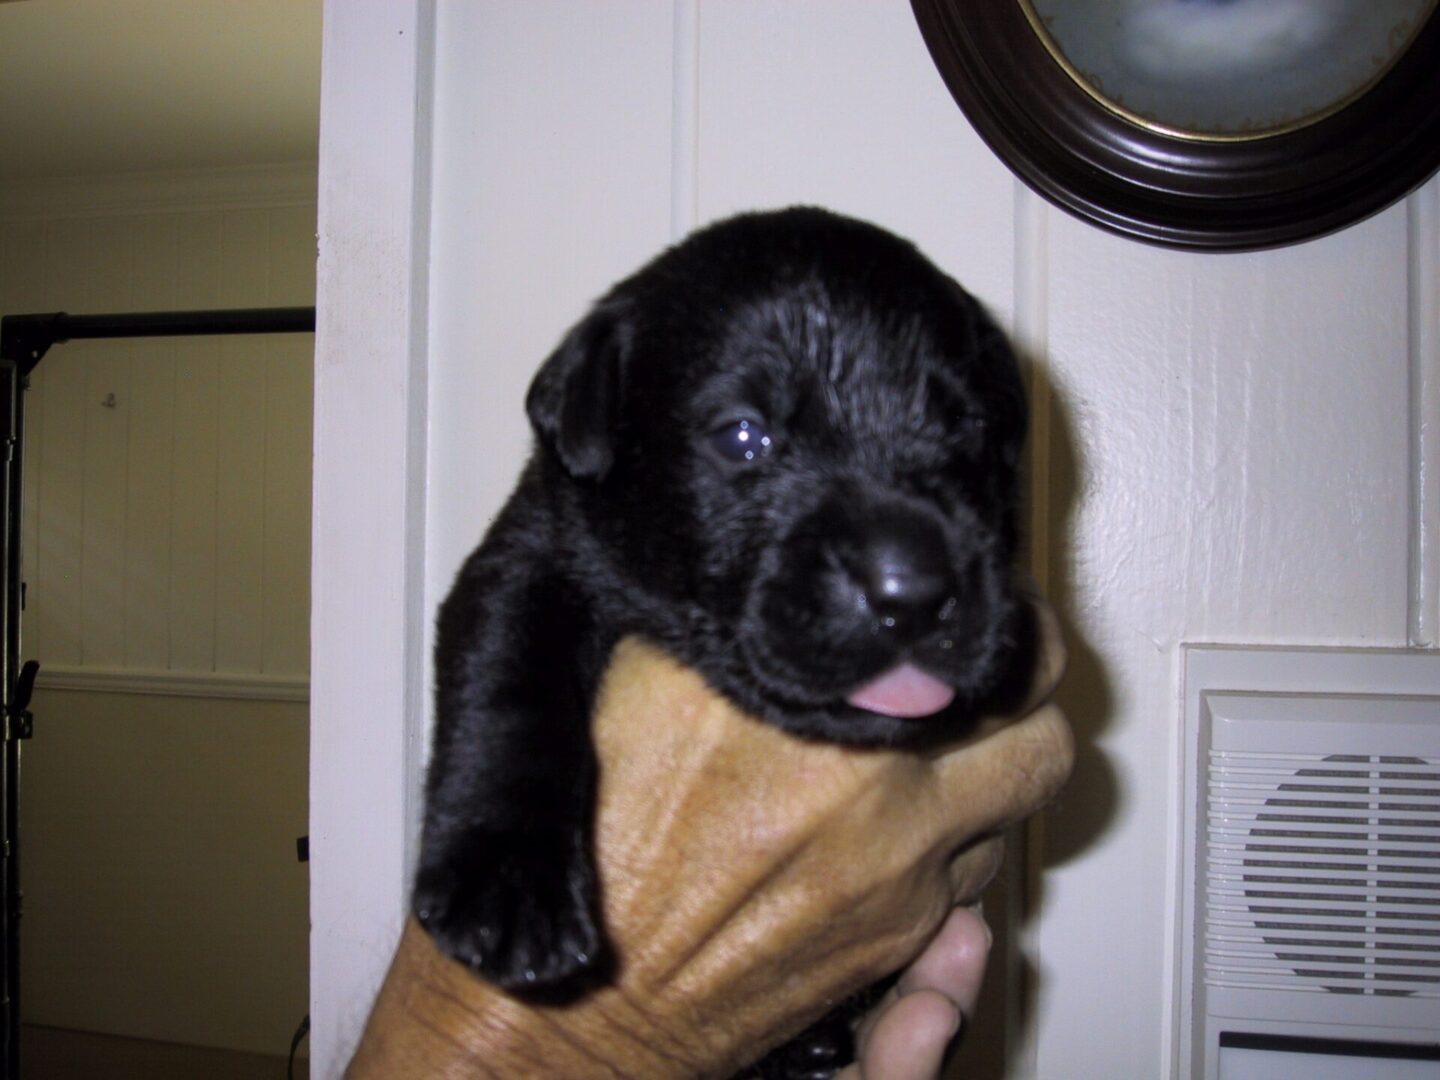 A black puppy on hand